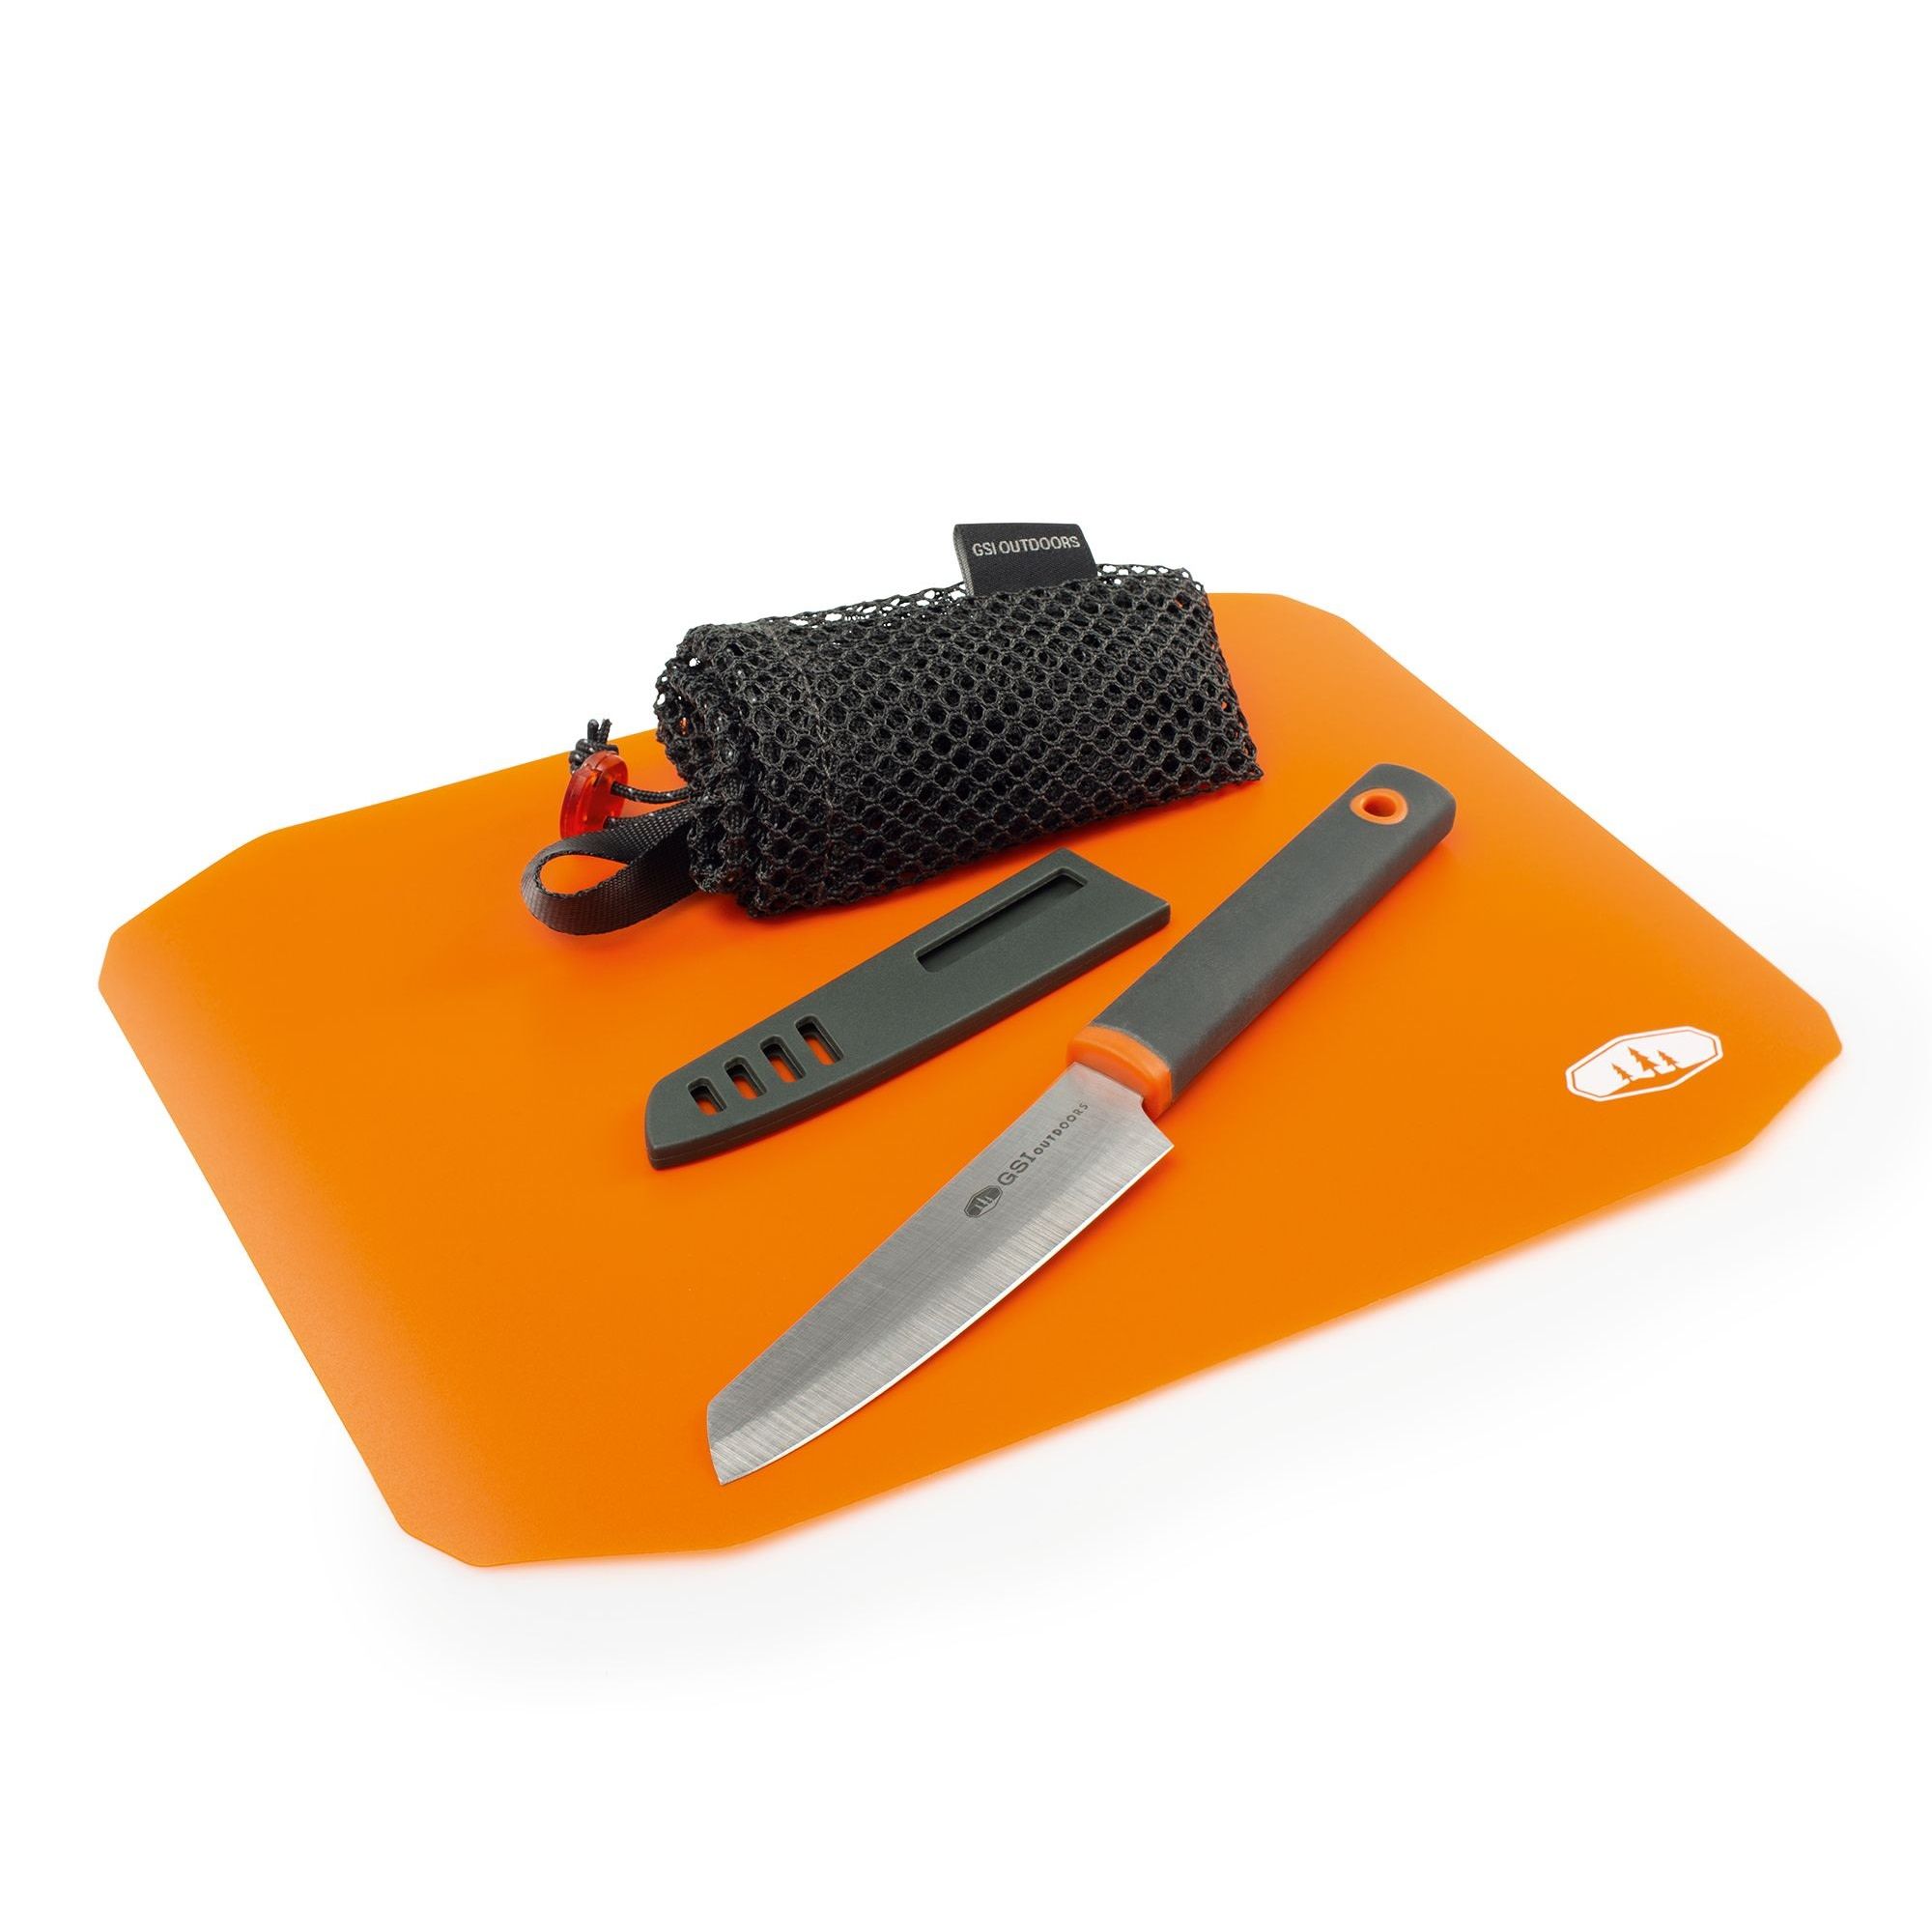 https://www.fjellsport.no/assets/blobs/gsi-outdoors-rollup-cutting-board-knife-set-nocolour-0a315f6489.jpeg?preset=medium&dpr=2